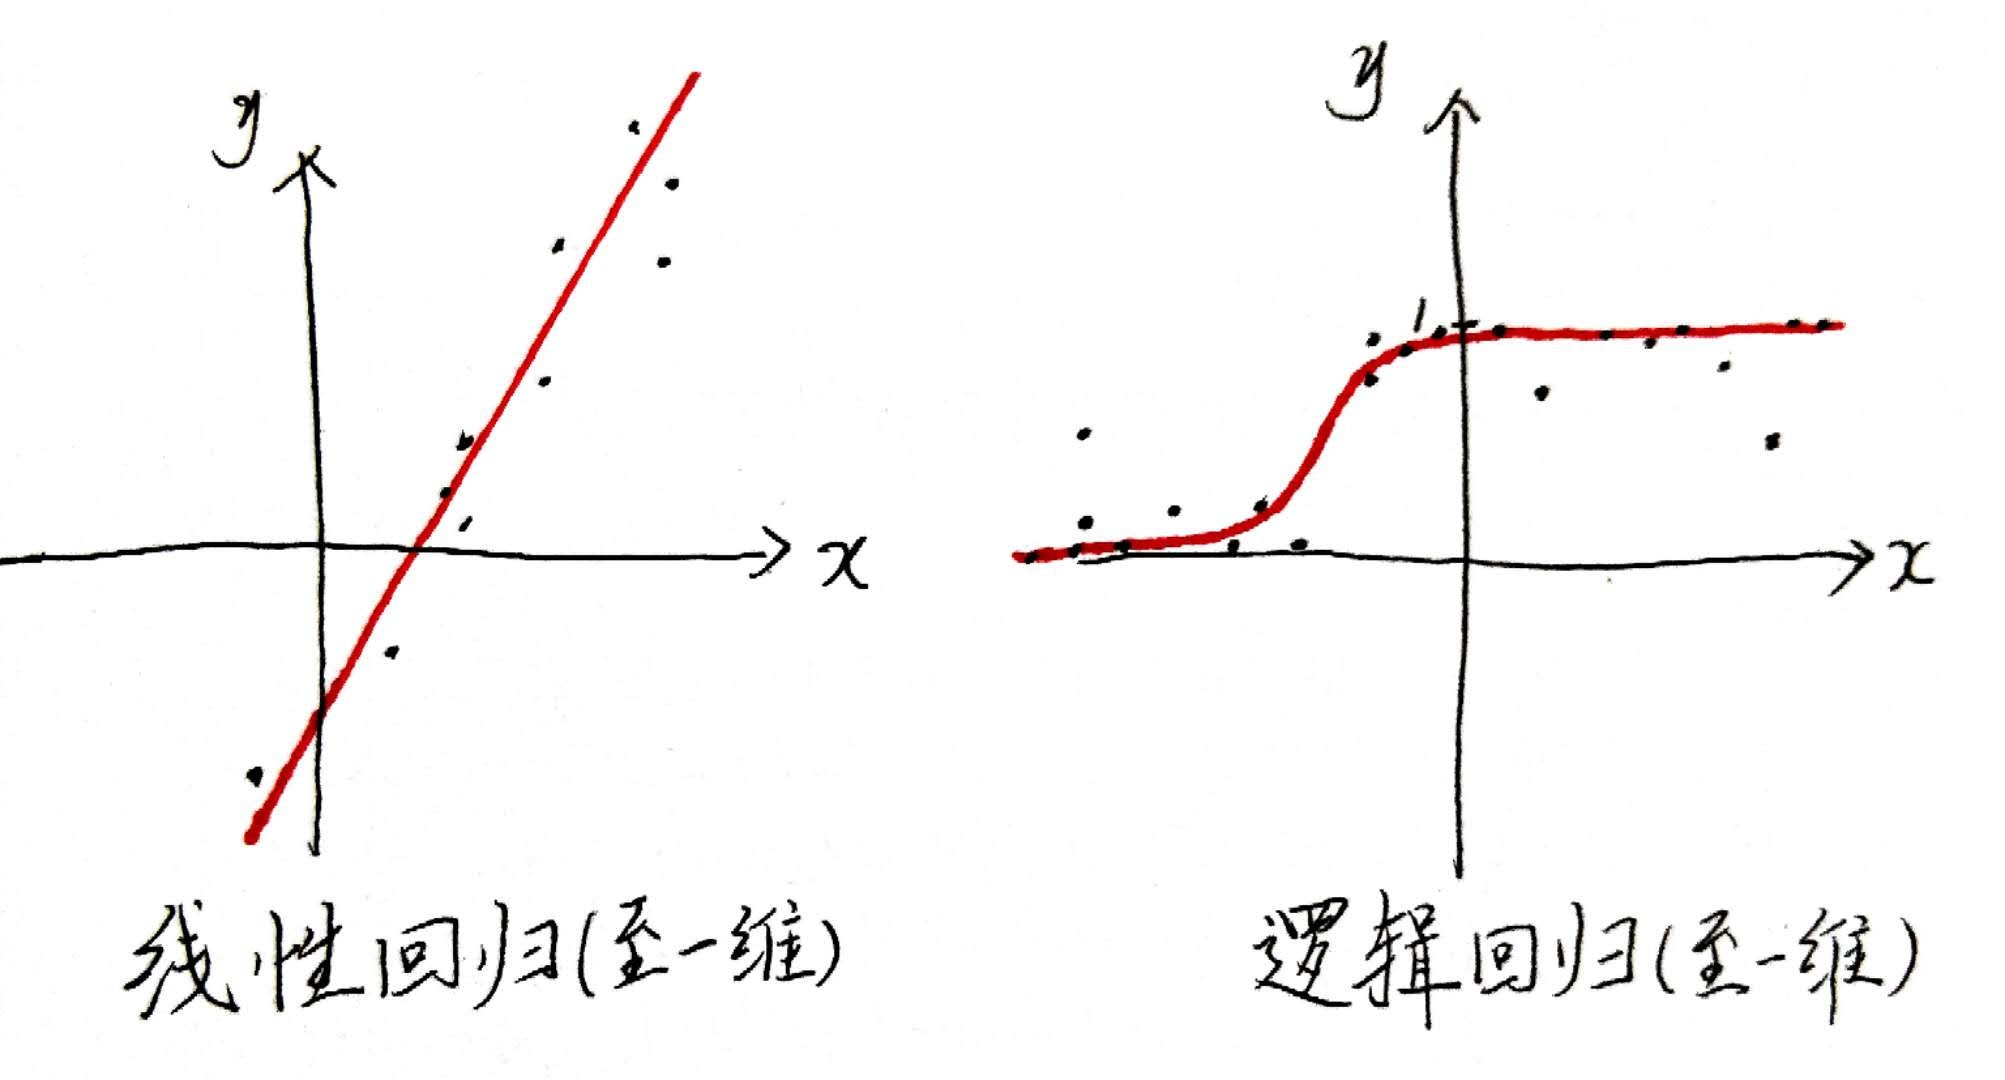 linear/logistic regression